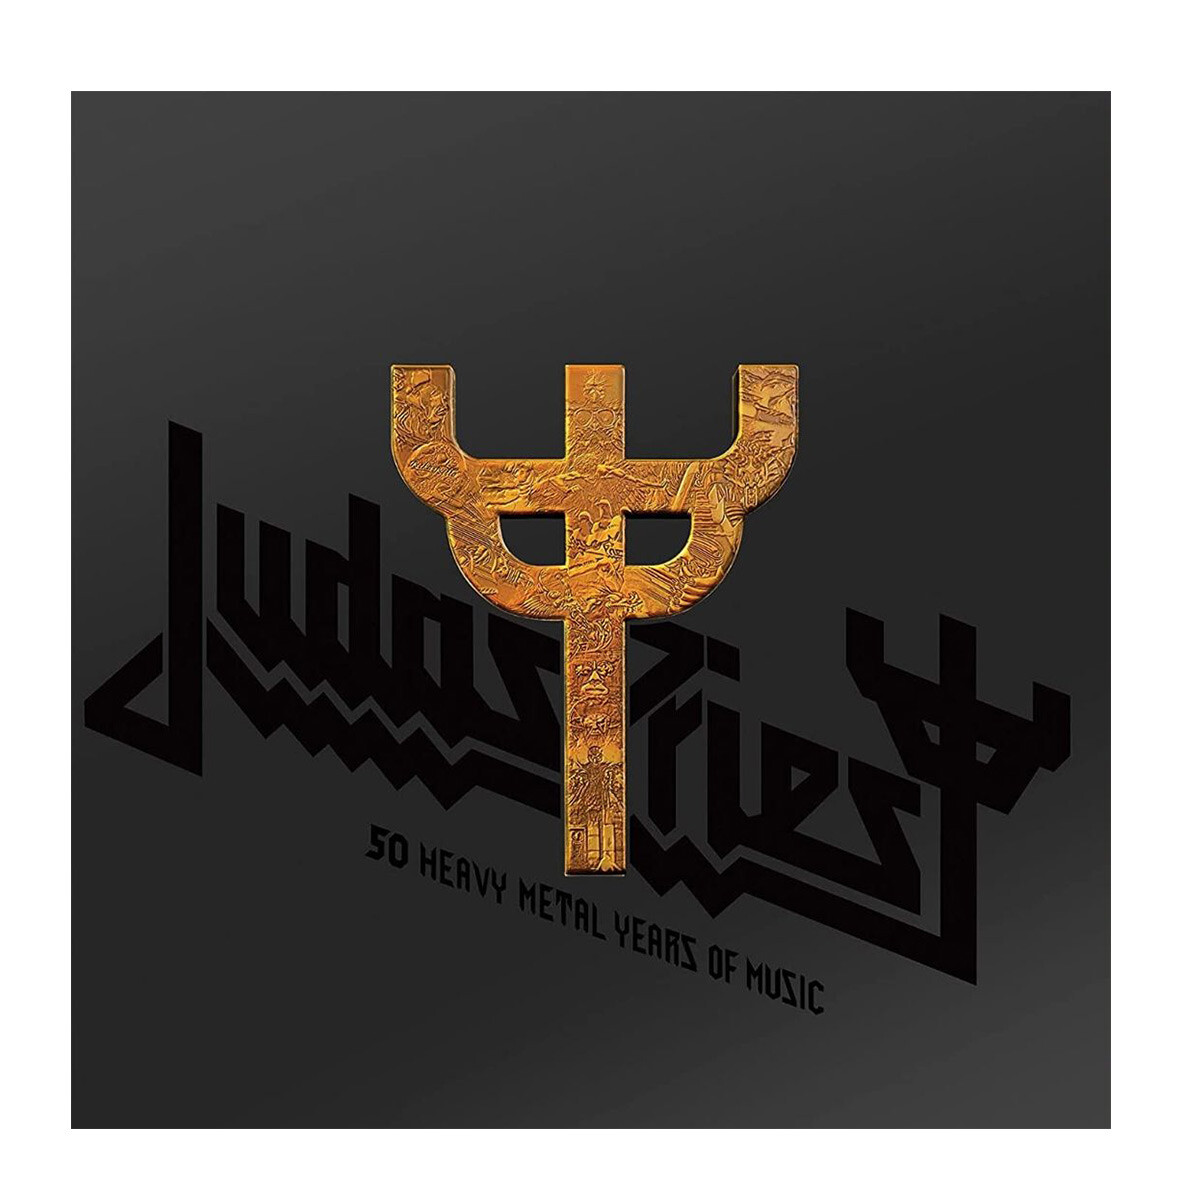 Judas Priest - Reflections - 50 Heavy Metal Years Of Music 